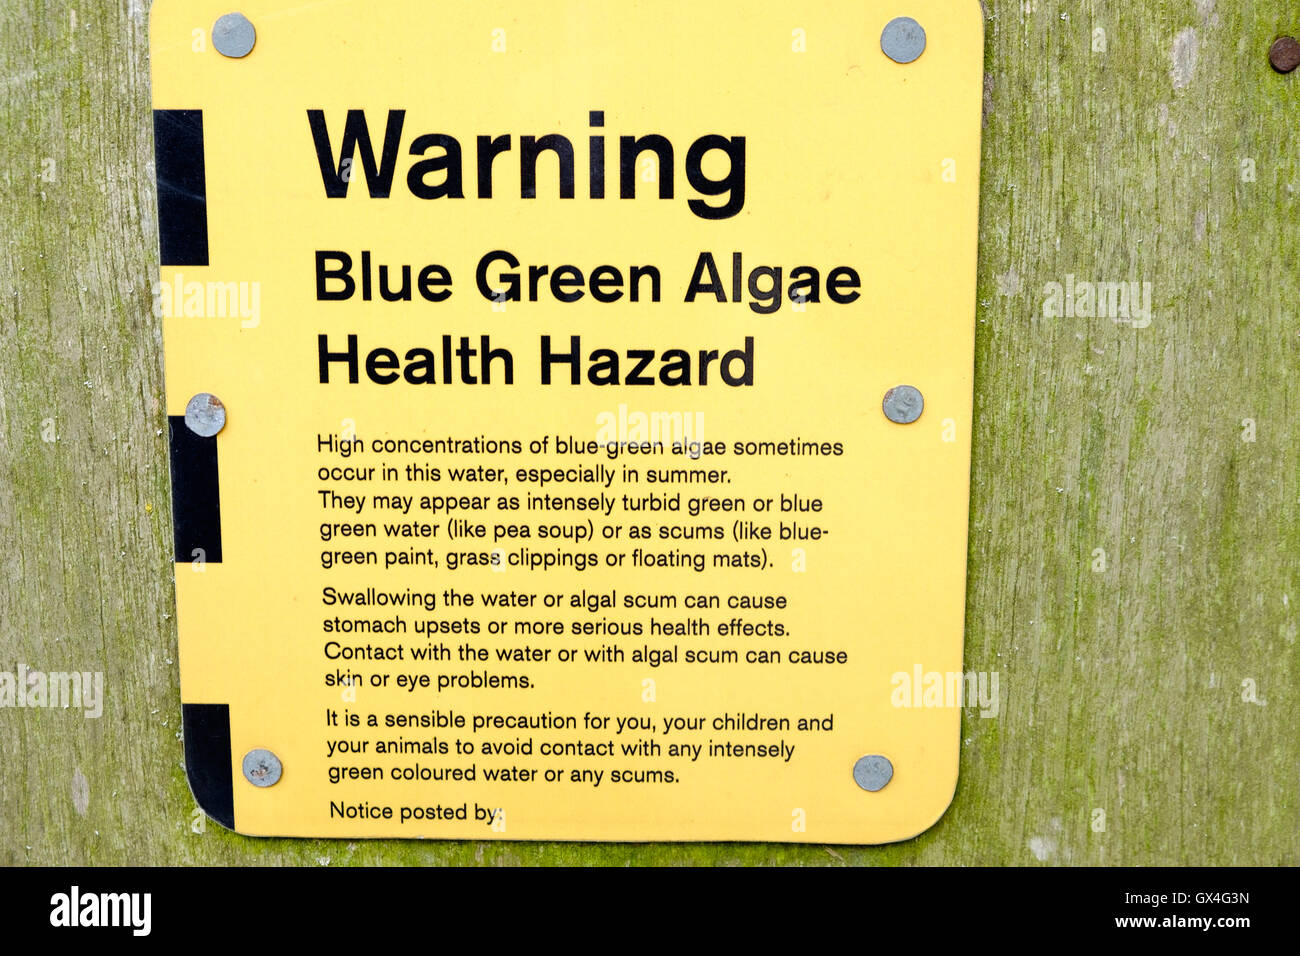 Warnign sign for Blue Green Algae Health Hazard Stock Photo